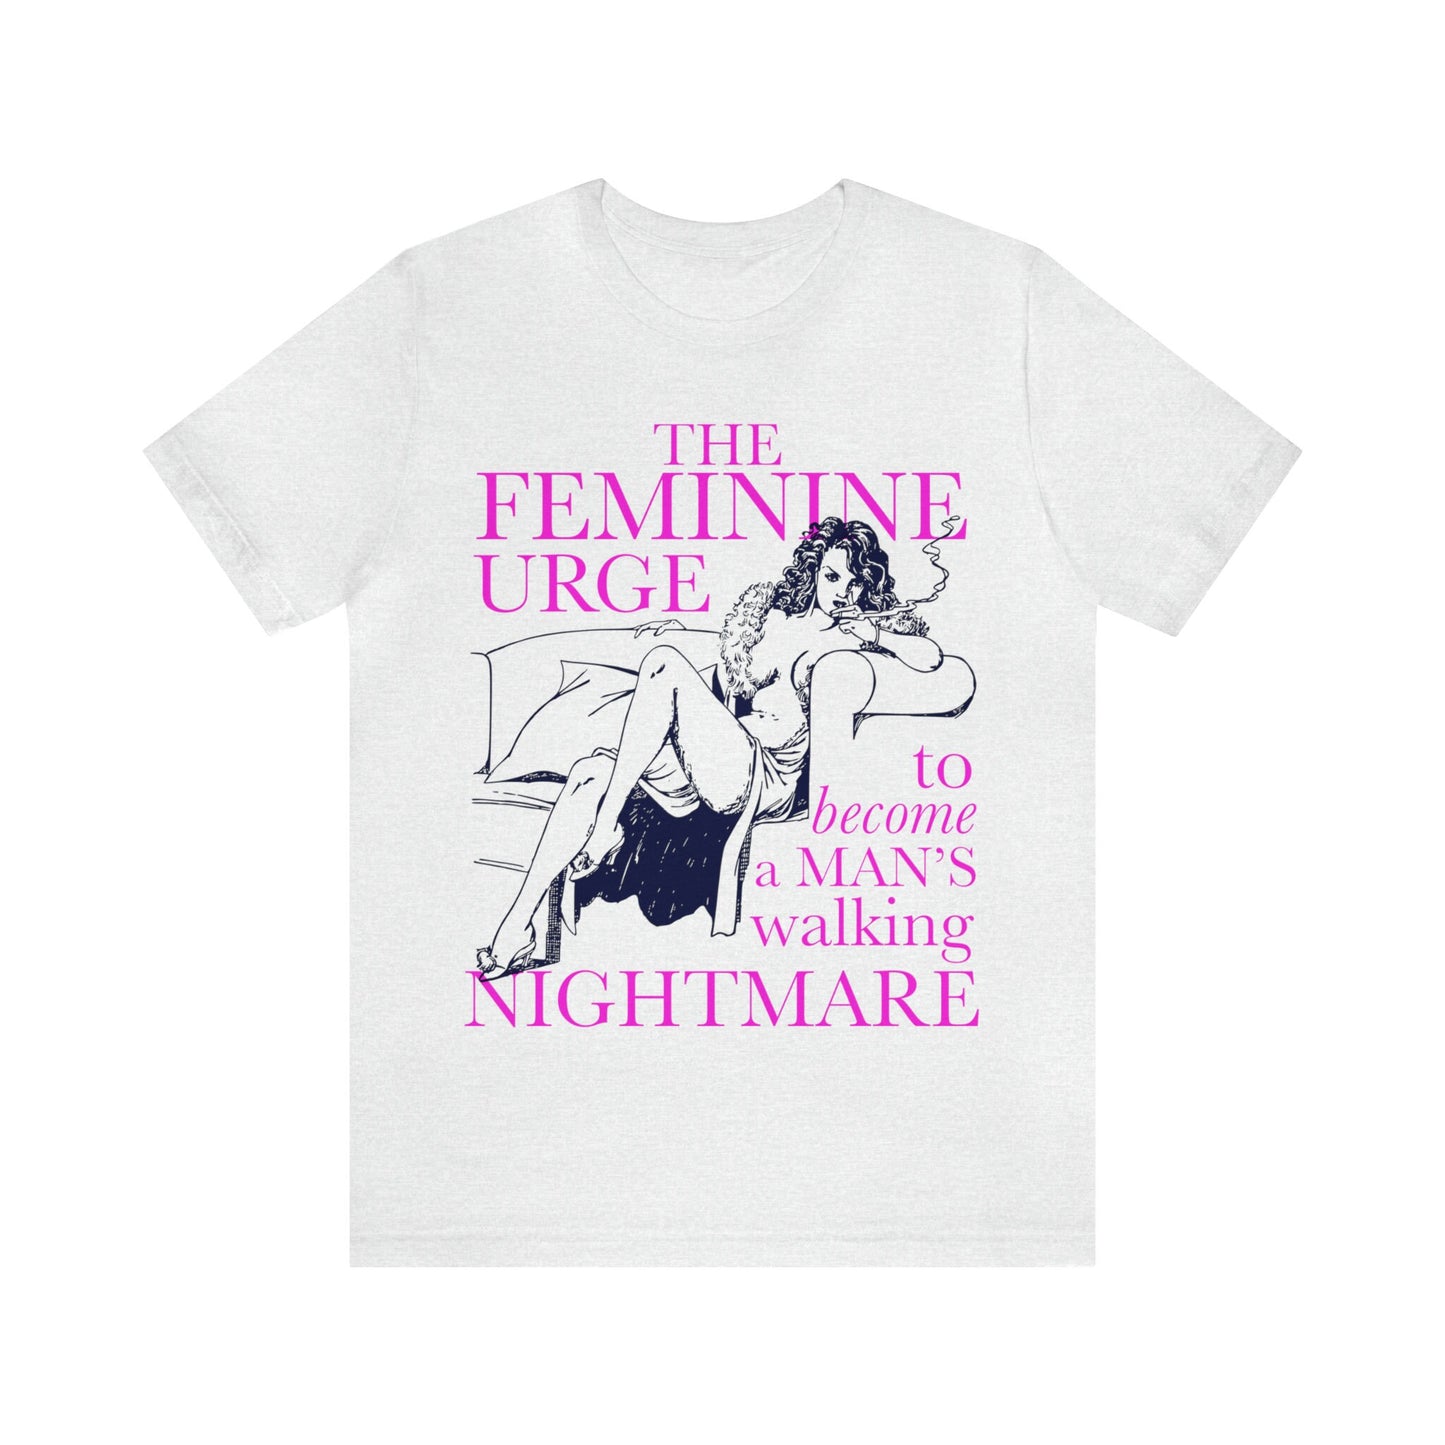 The feminine urge to become a man's walking nightmare shirt